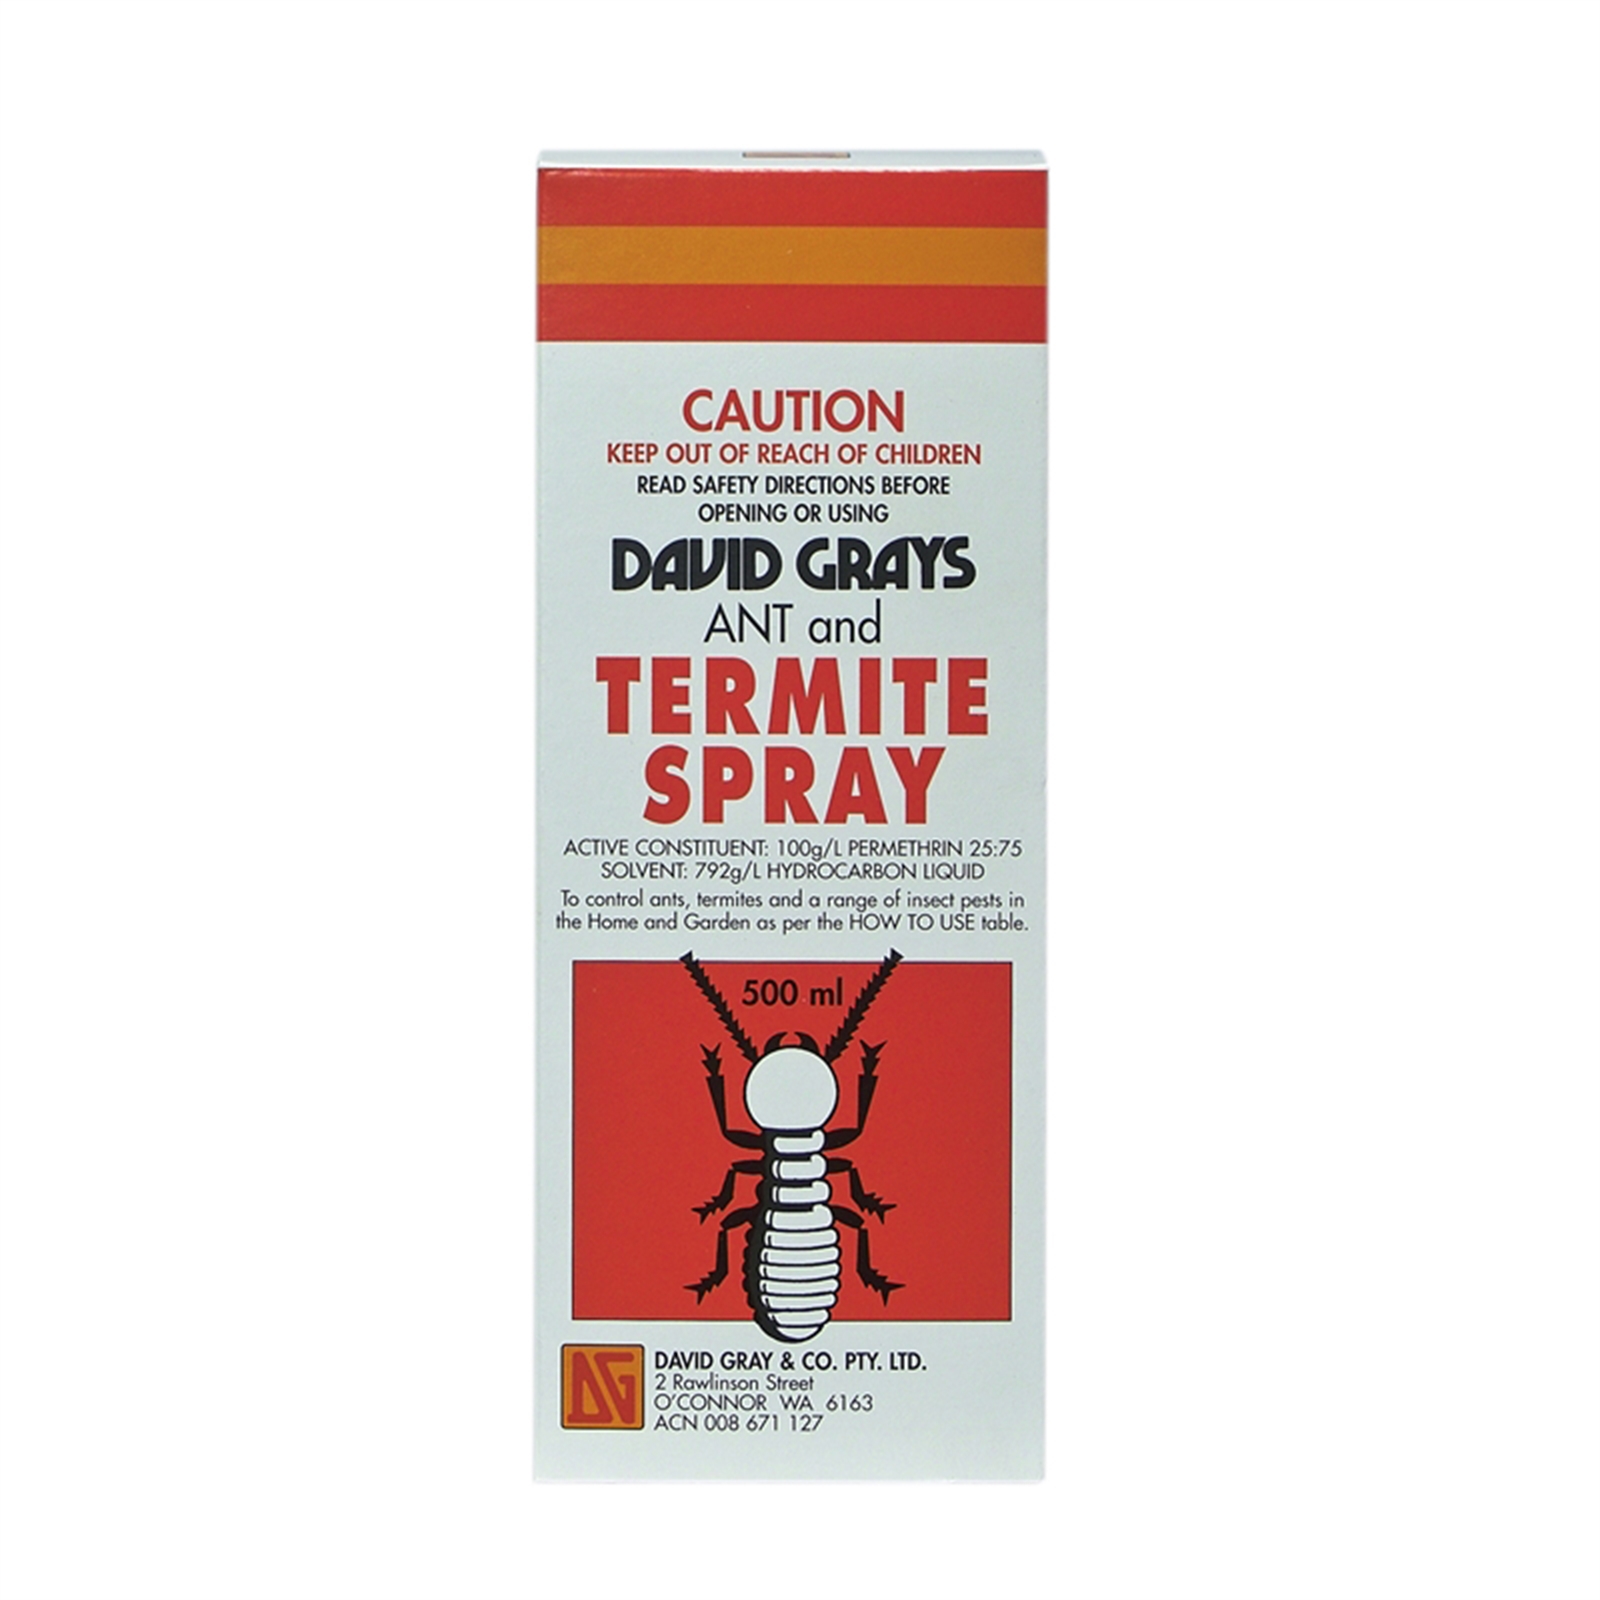 David Grays 500ml Ant and Termite Spray